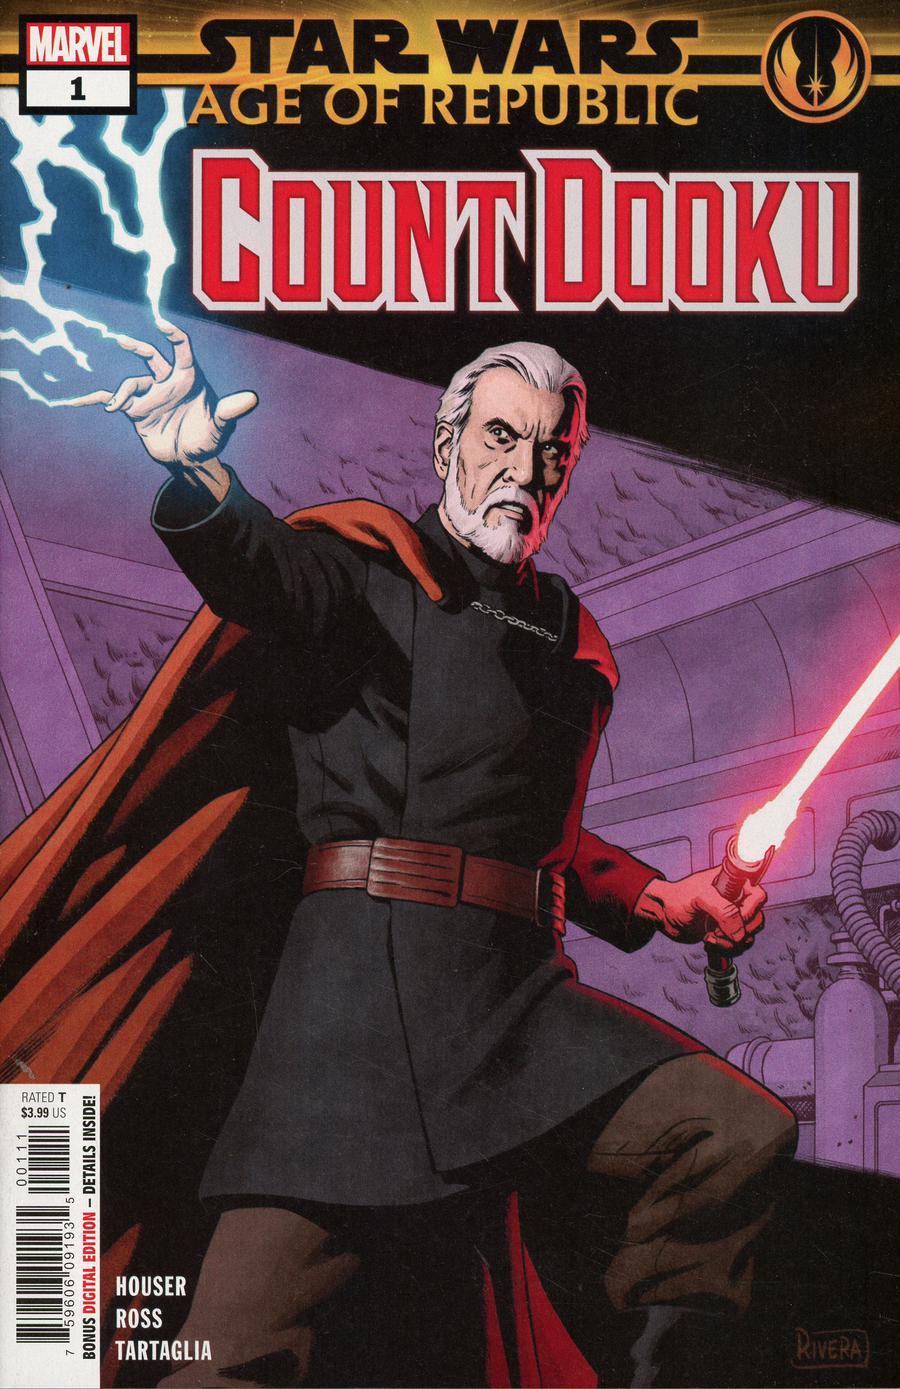 Star Wars Age Of Republic Count Dooku Vol. 1 #1